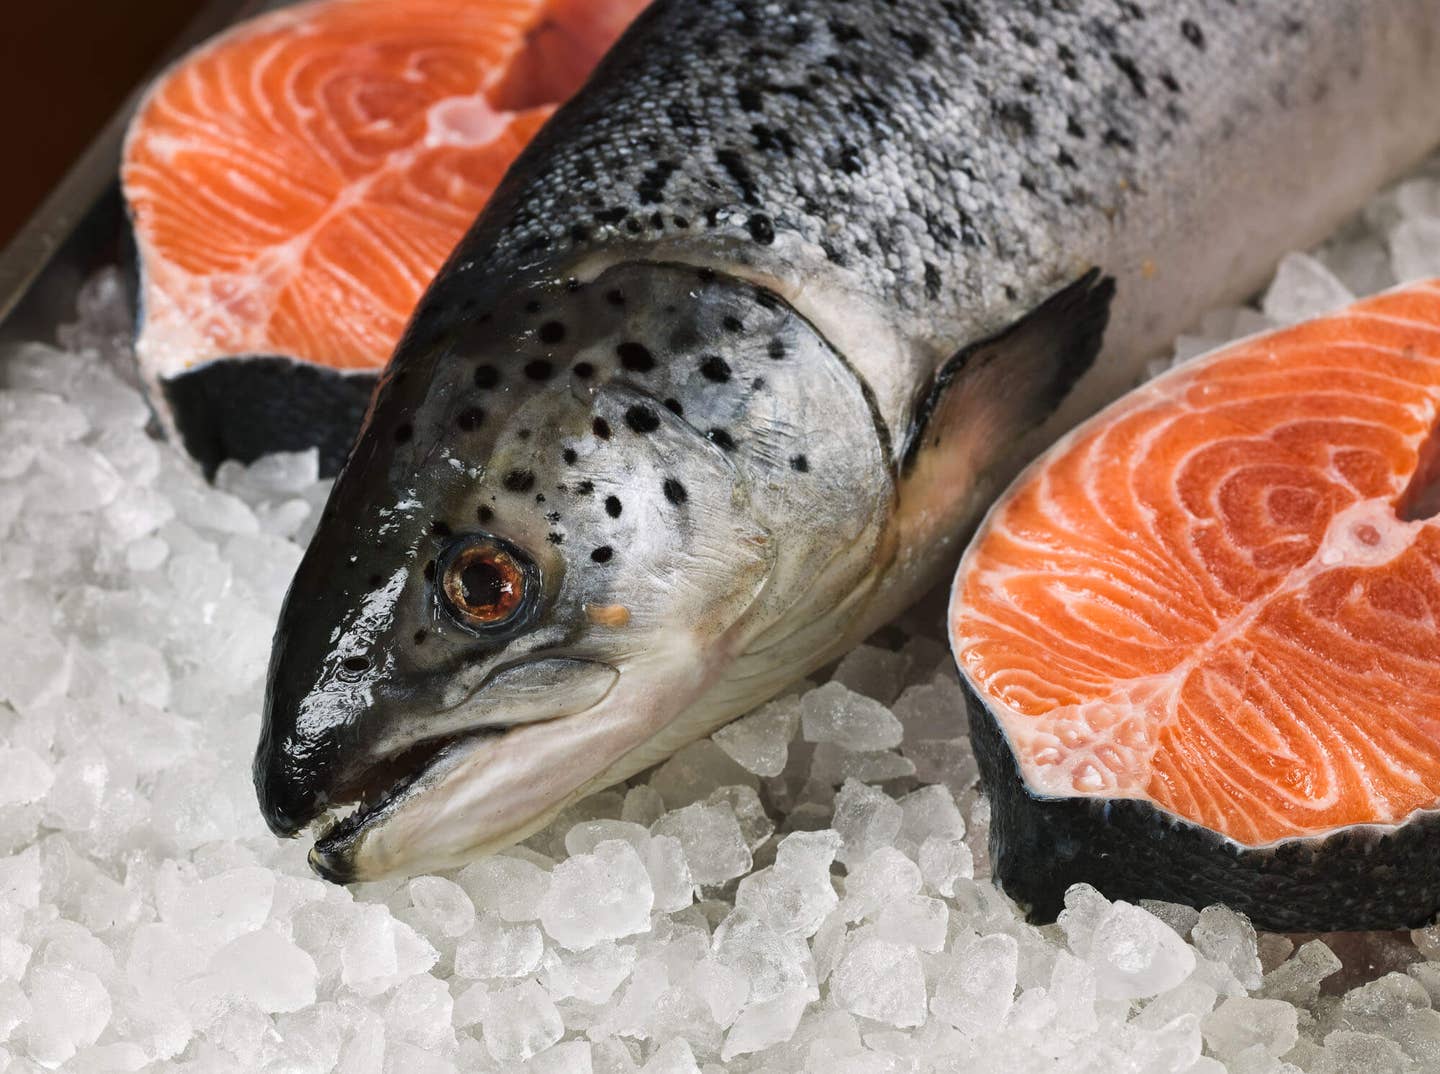 Nutrition Facts Video: Dark Fish Like Salmon May Cause Heartbeat  Irregularities